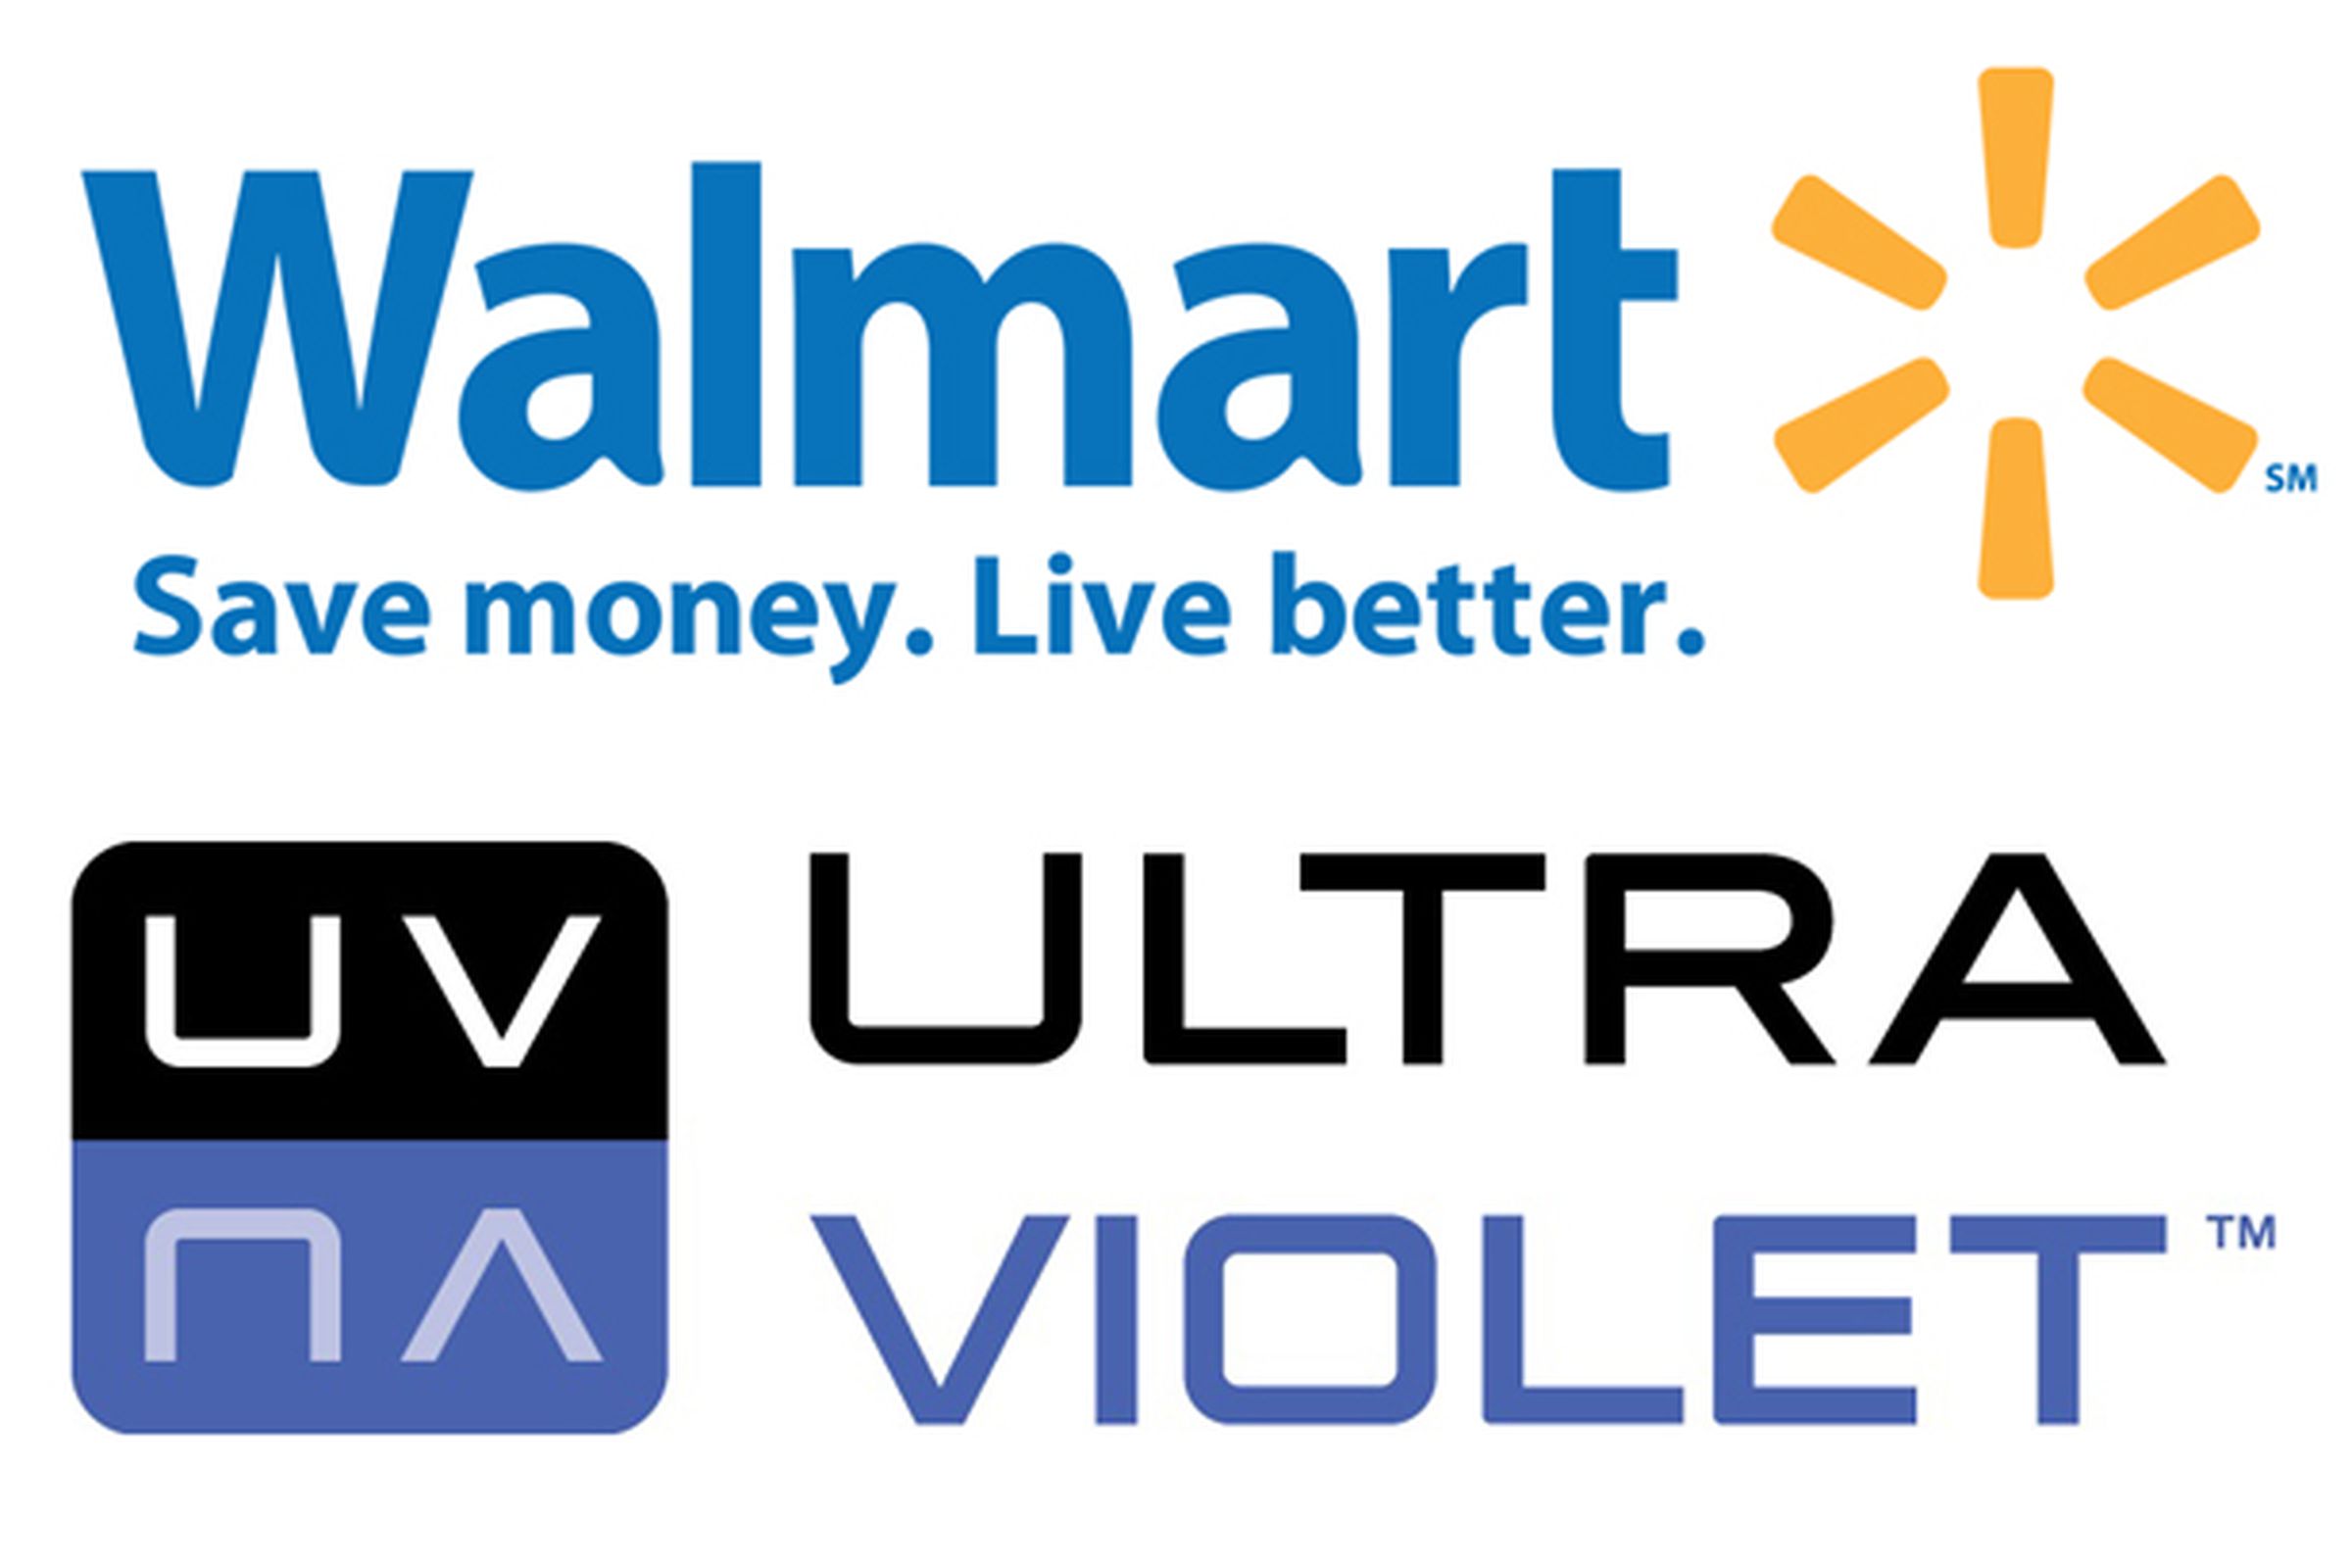 Walmart and Ultraviolet Logos